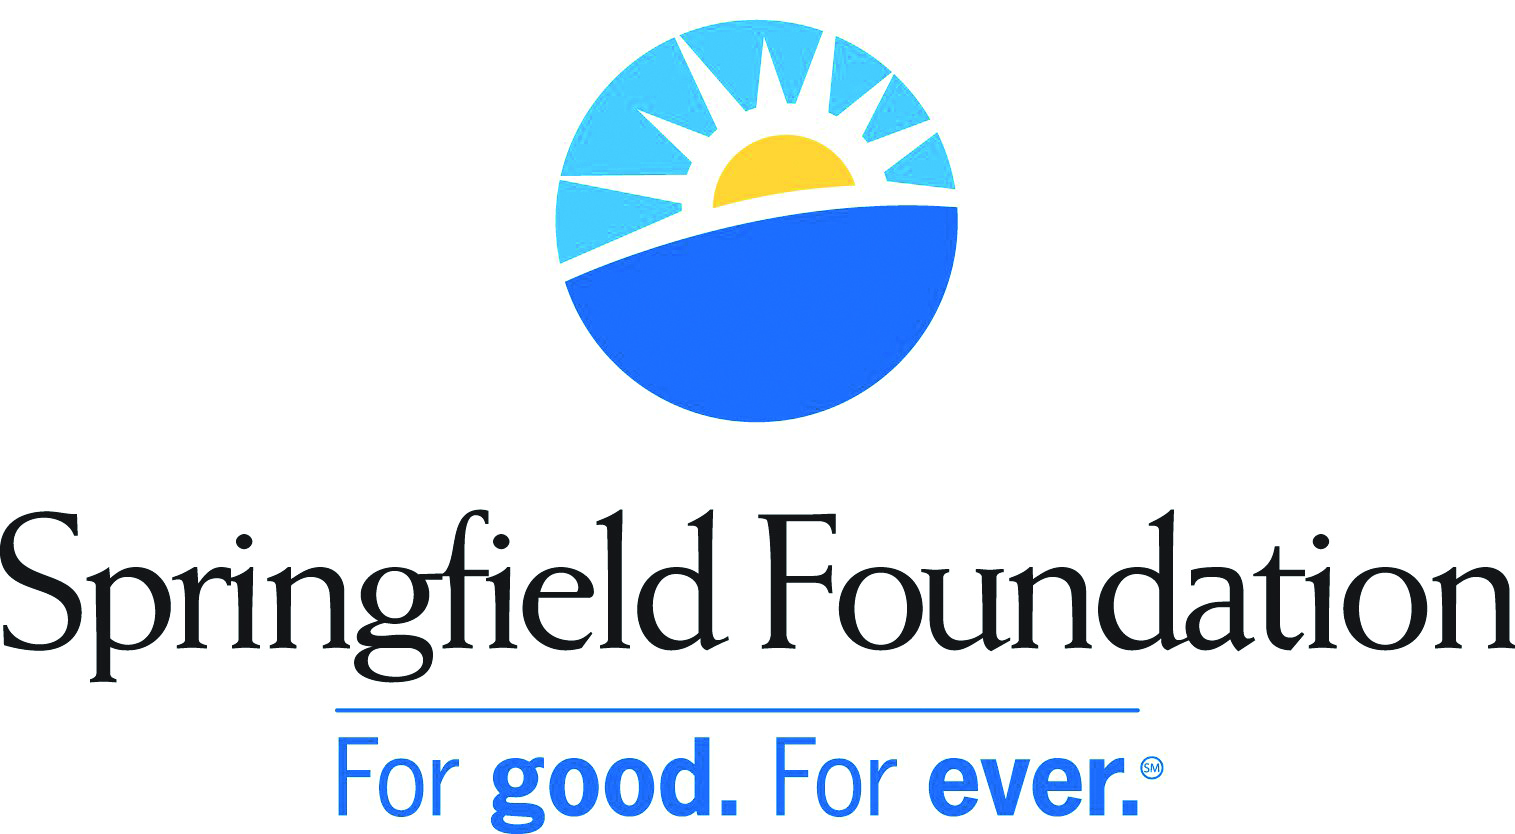 The Springfield Foundation logo